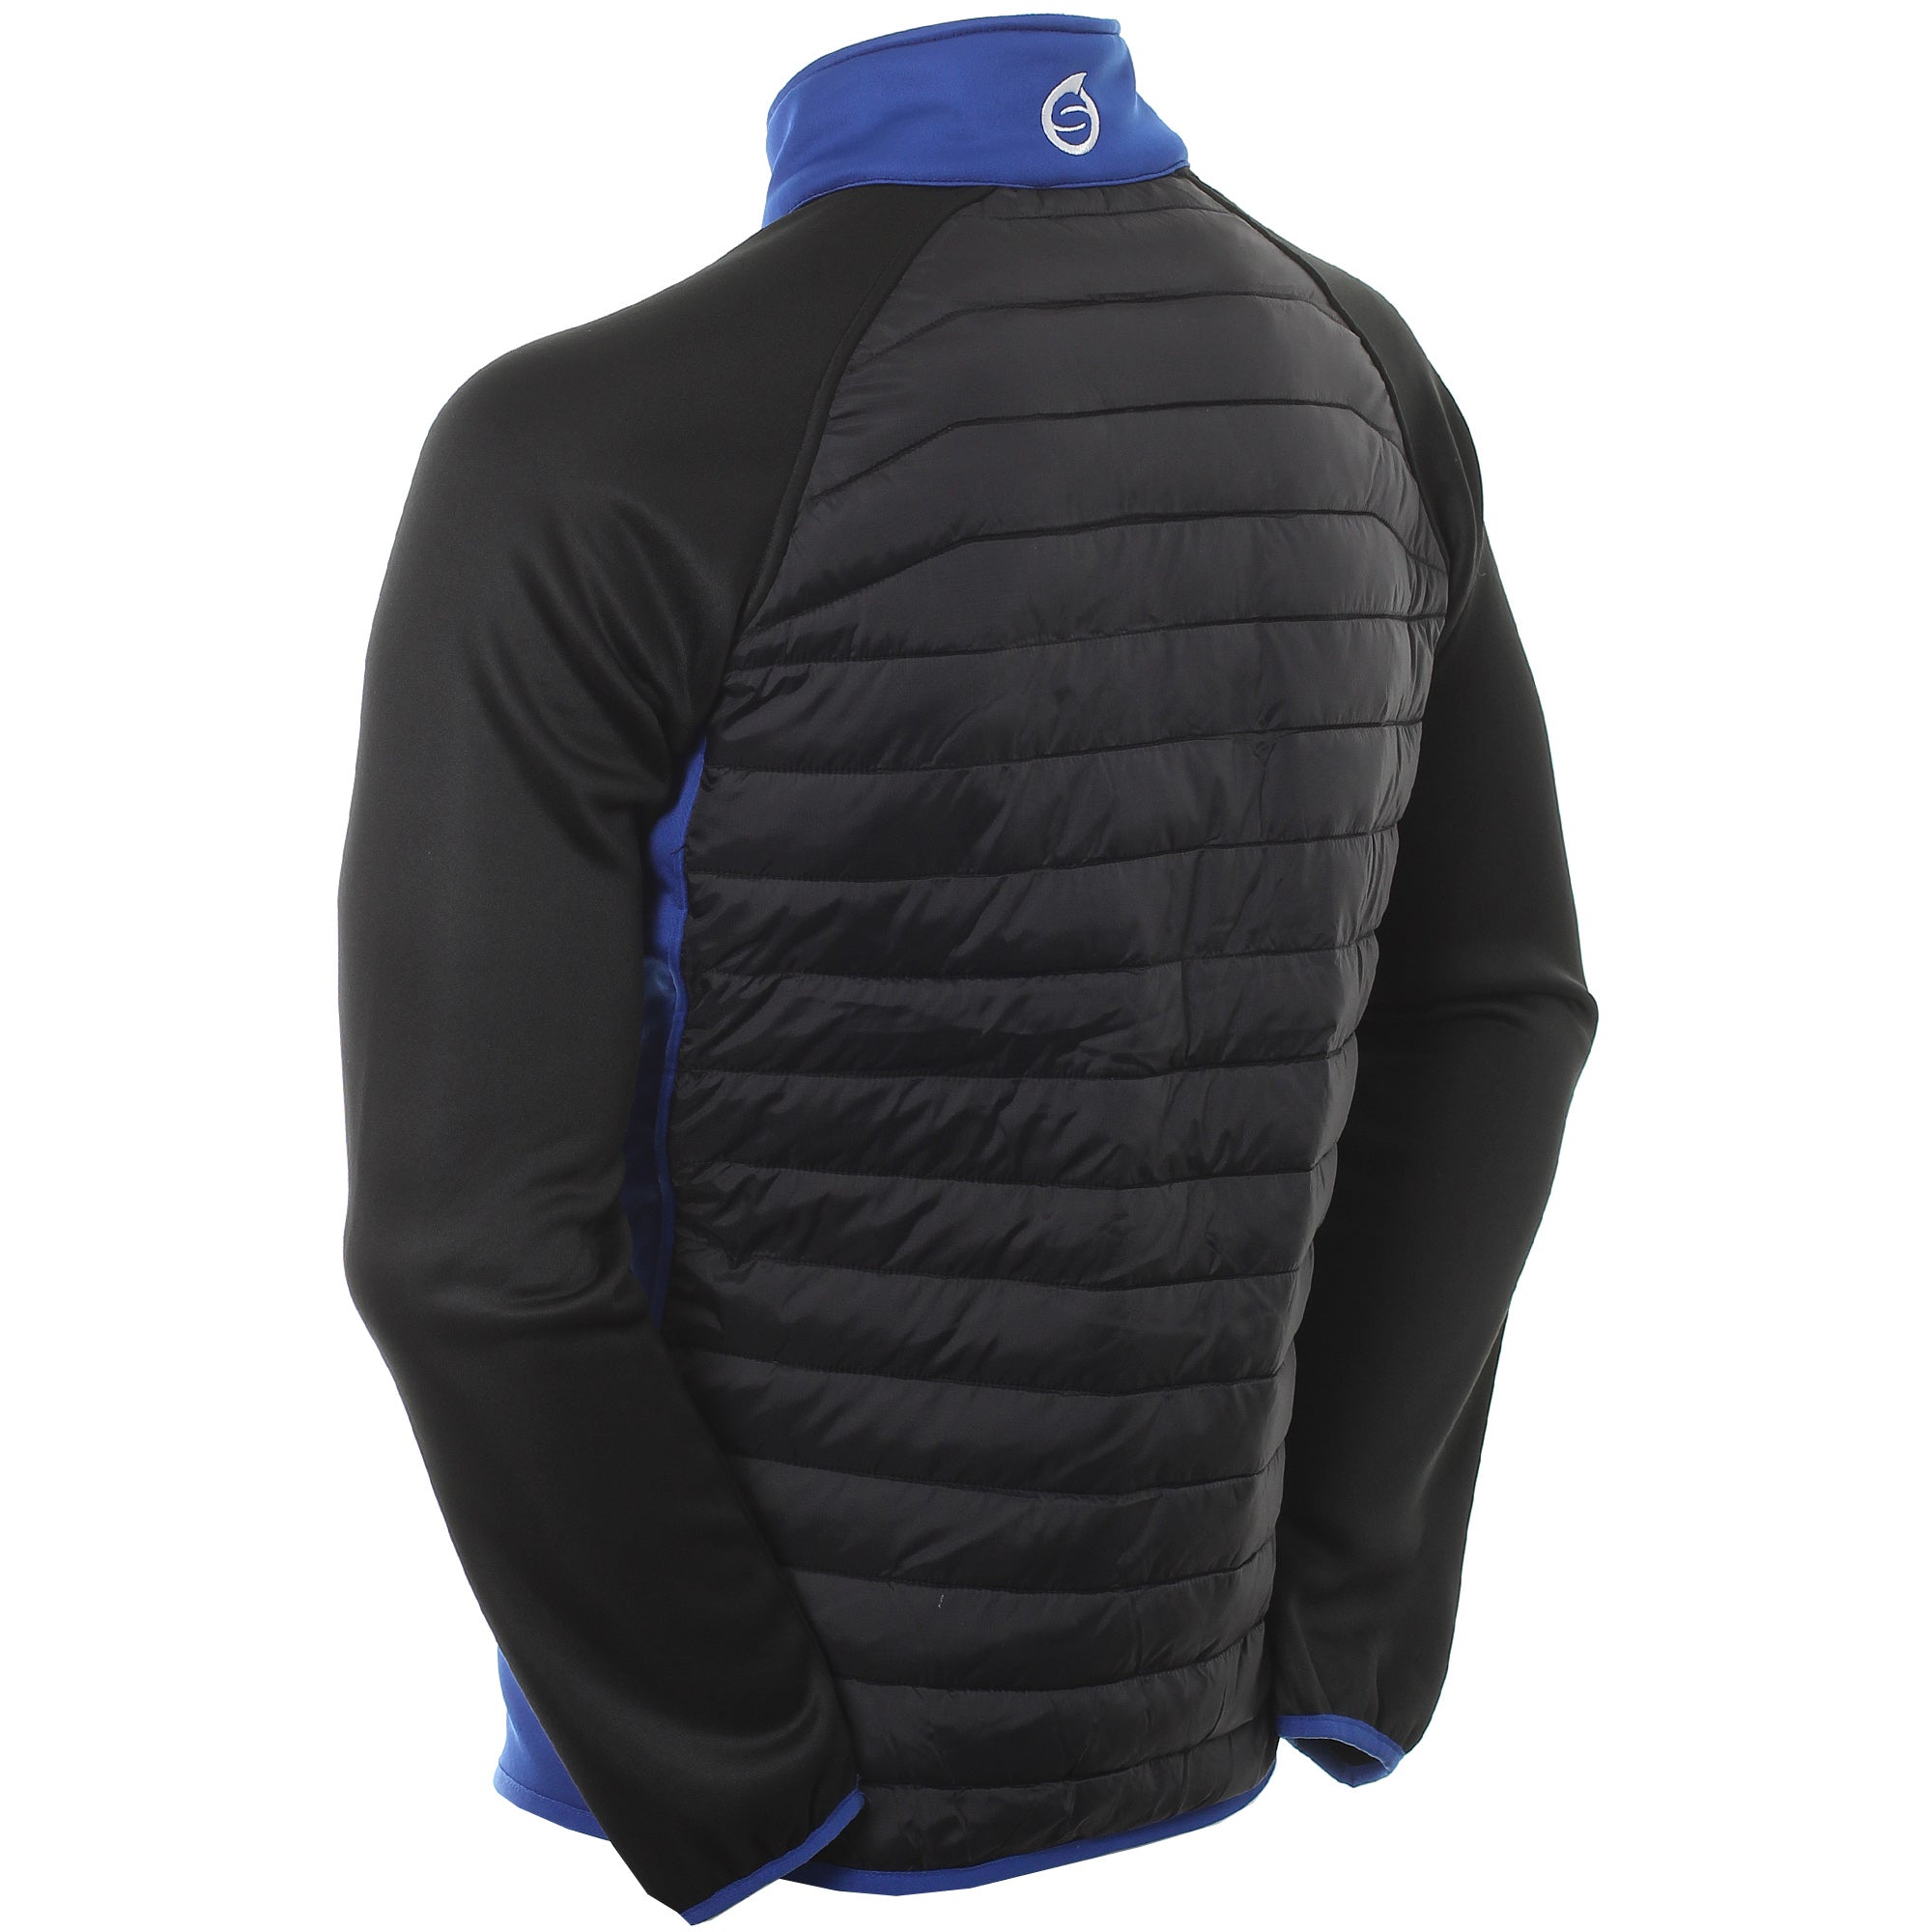 sunderland-golf-zermatt-padded-jacket-black-electric-blue